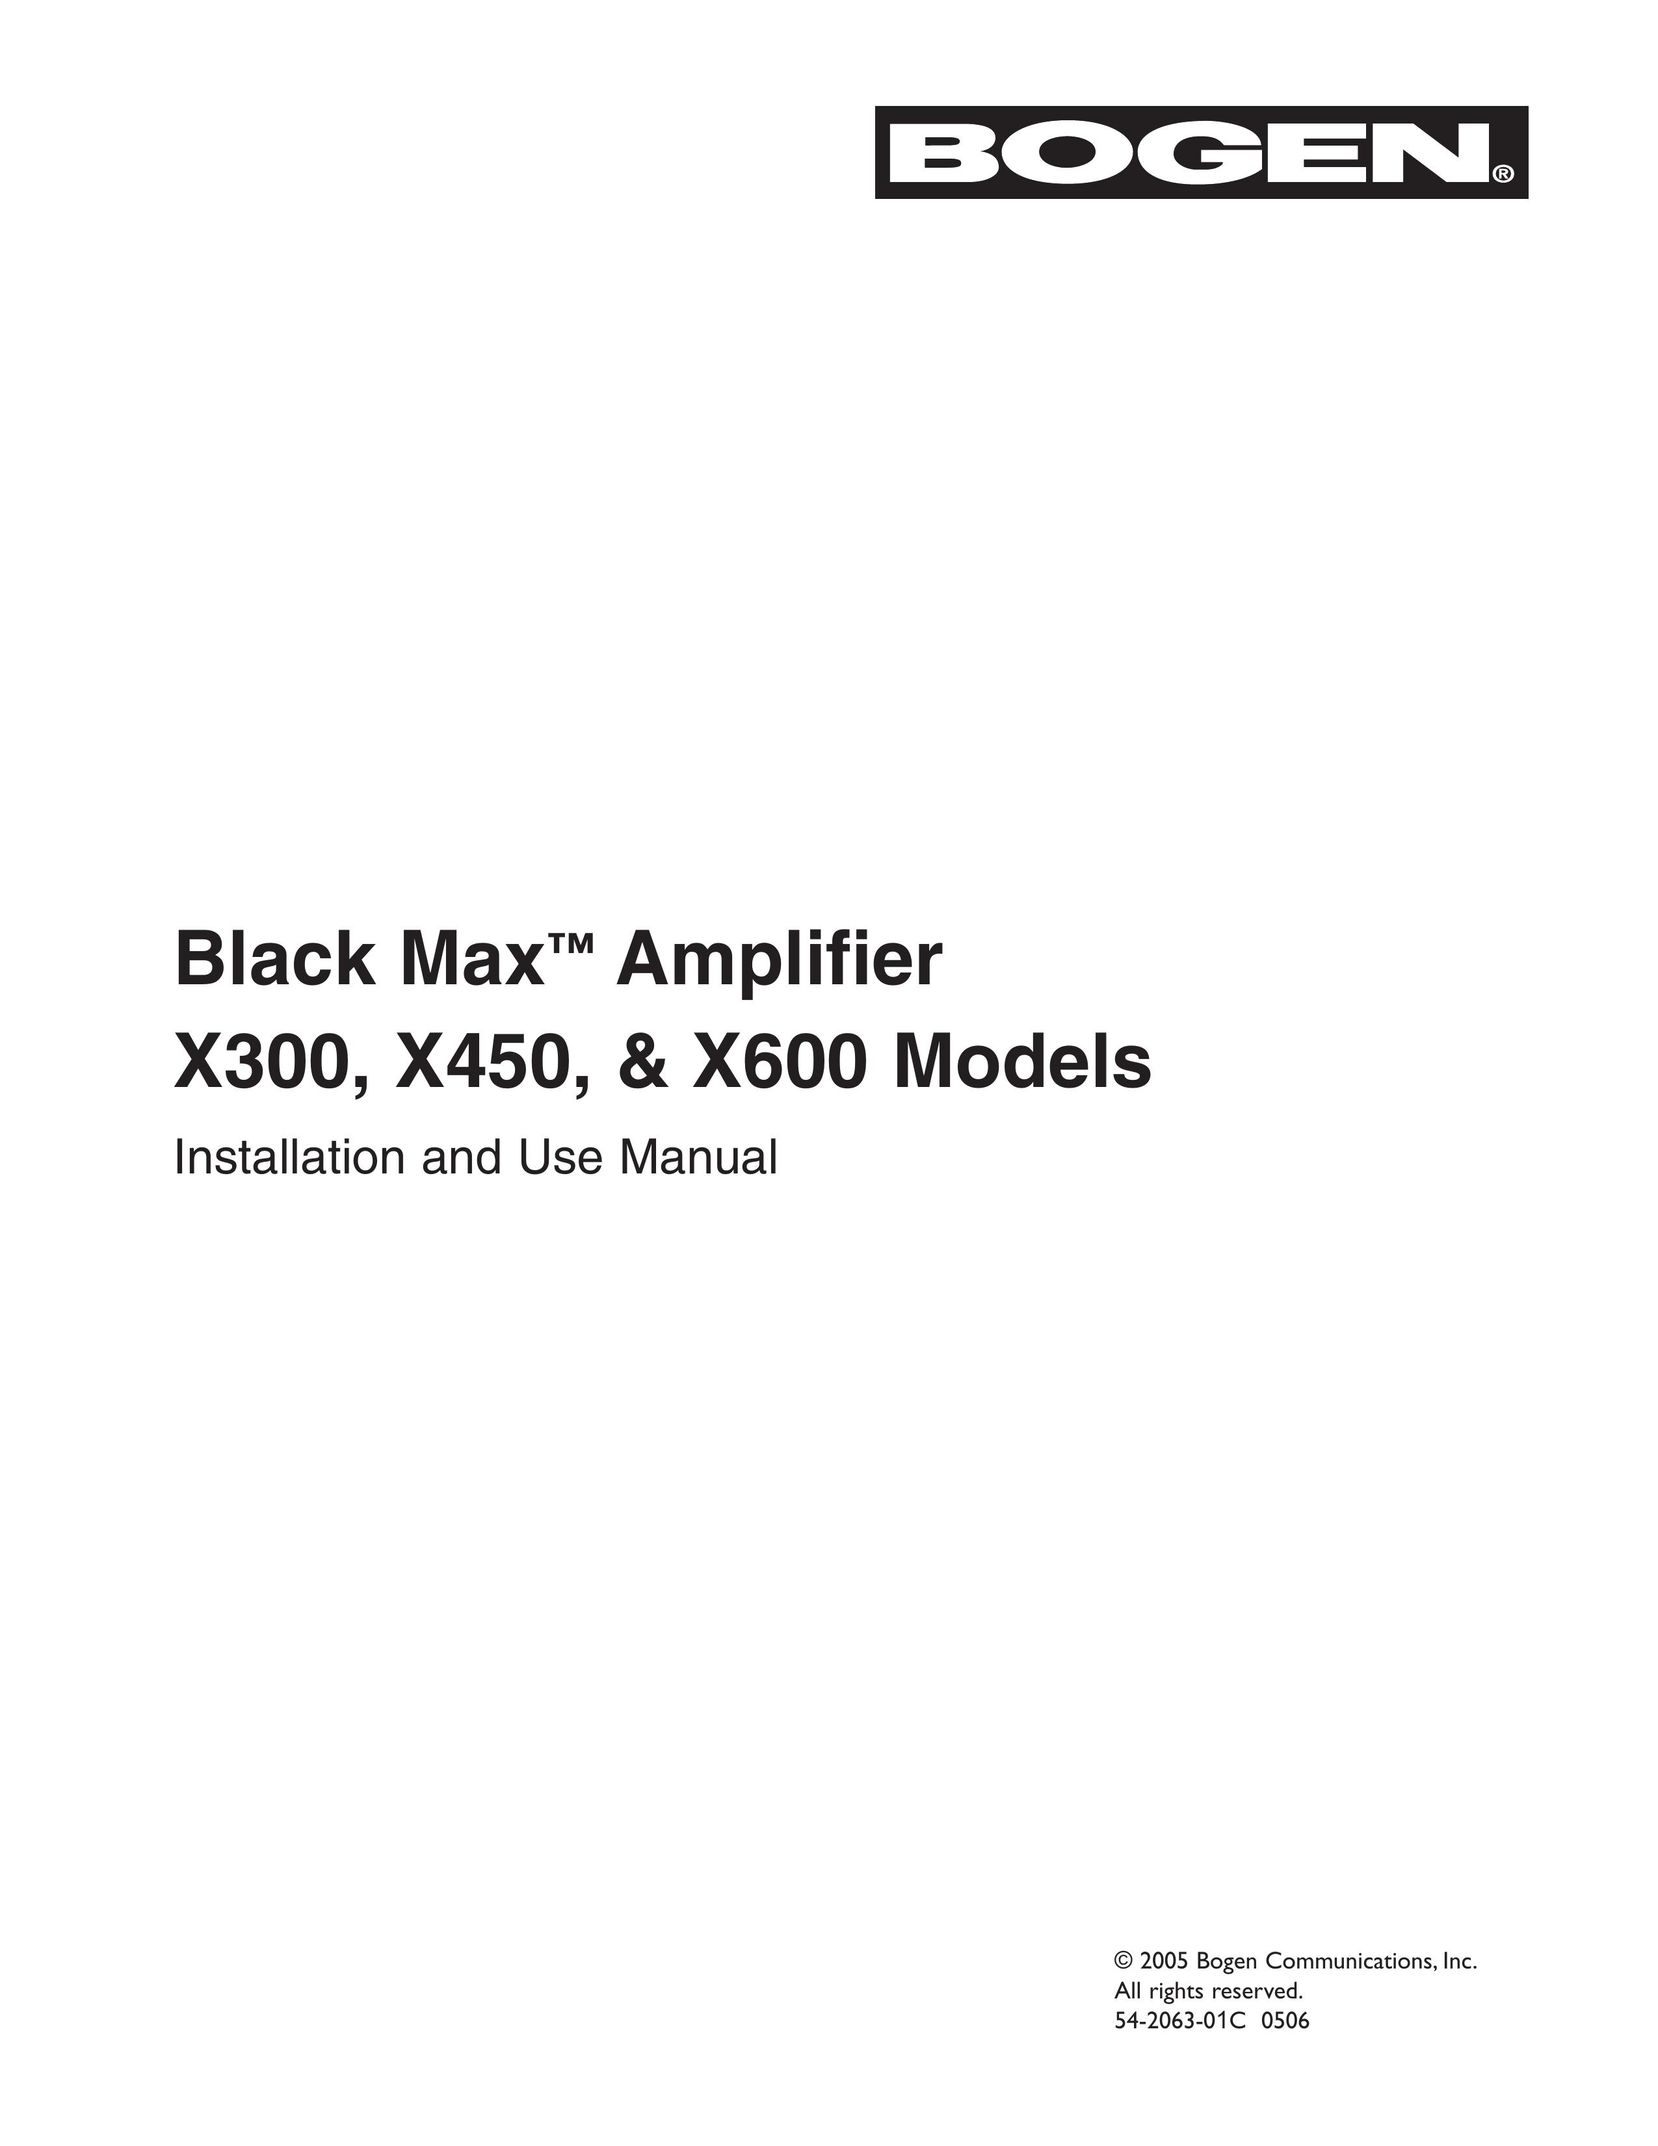 Bogen & X600 Stereo Amplifier User Manual